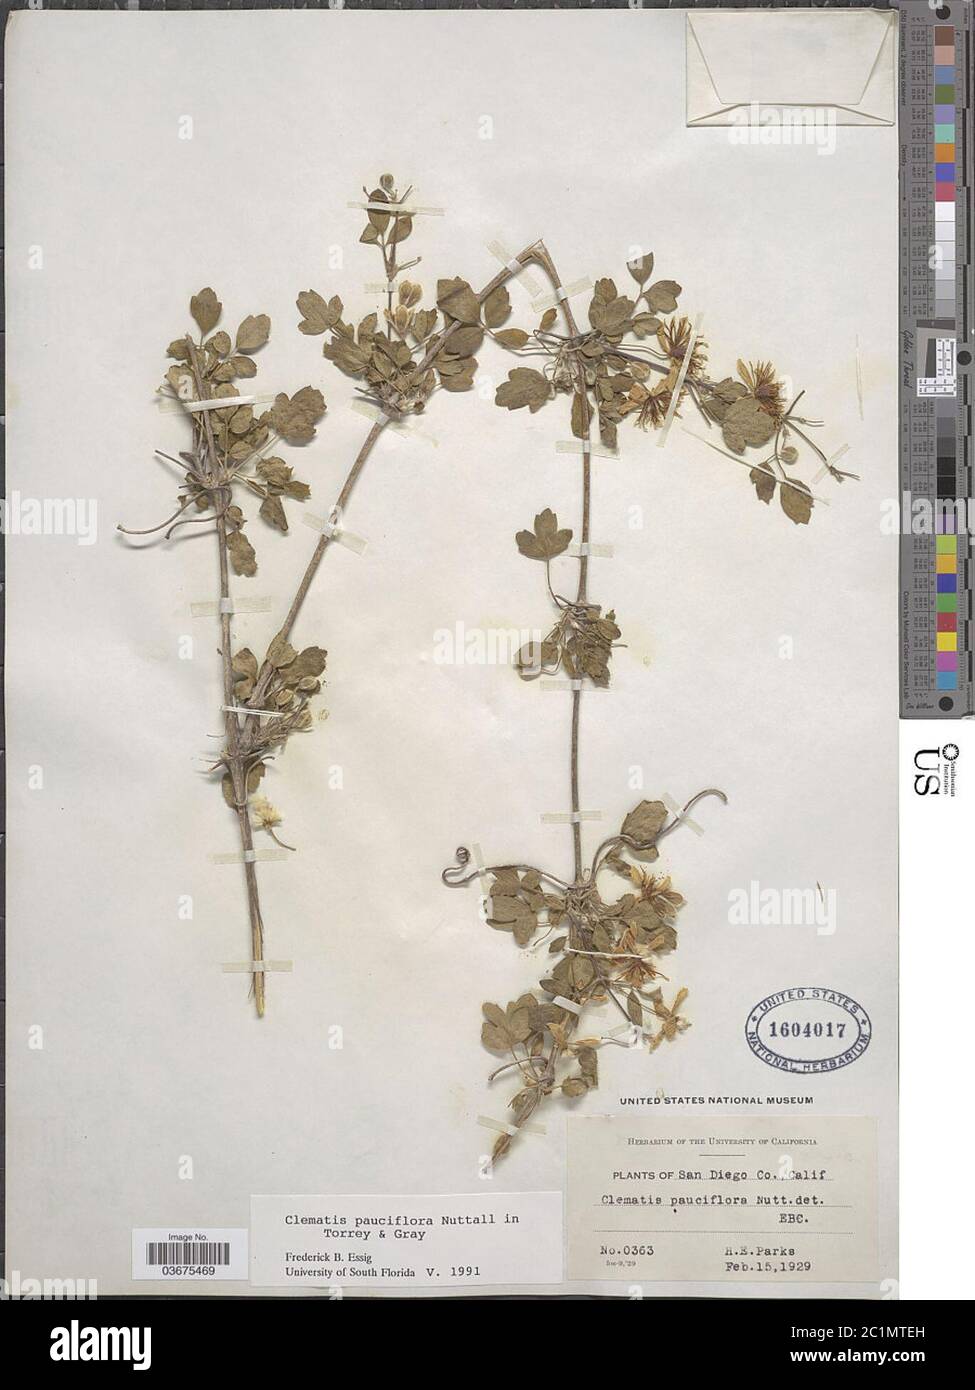 Clematis pauciflora Nutt ex Torr A Gray Clematis pauciflora Nutt ex Torr A Gray. Stock Photo